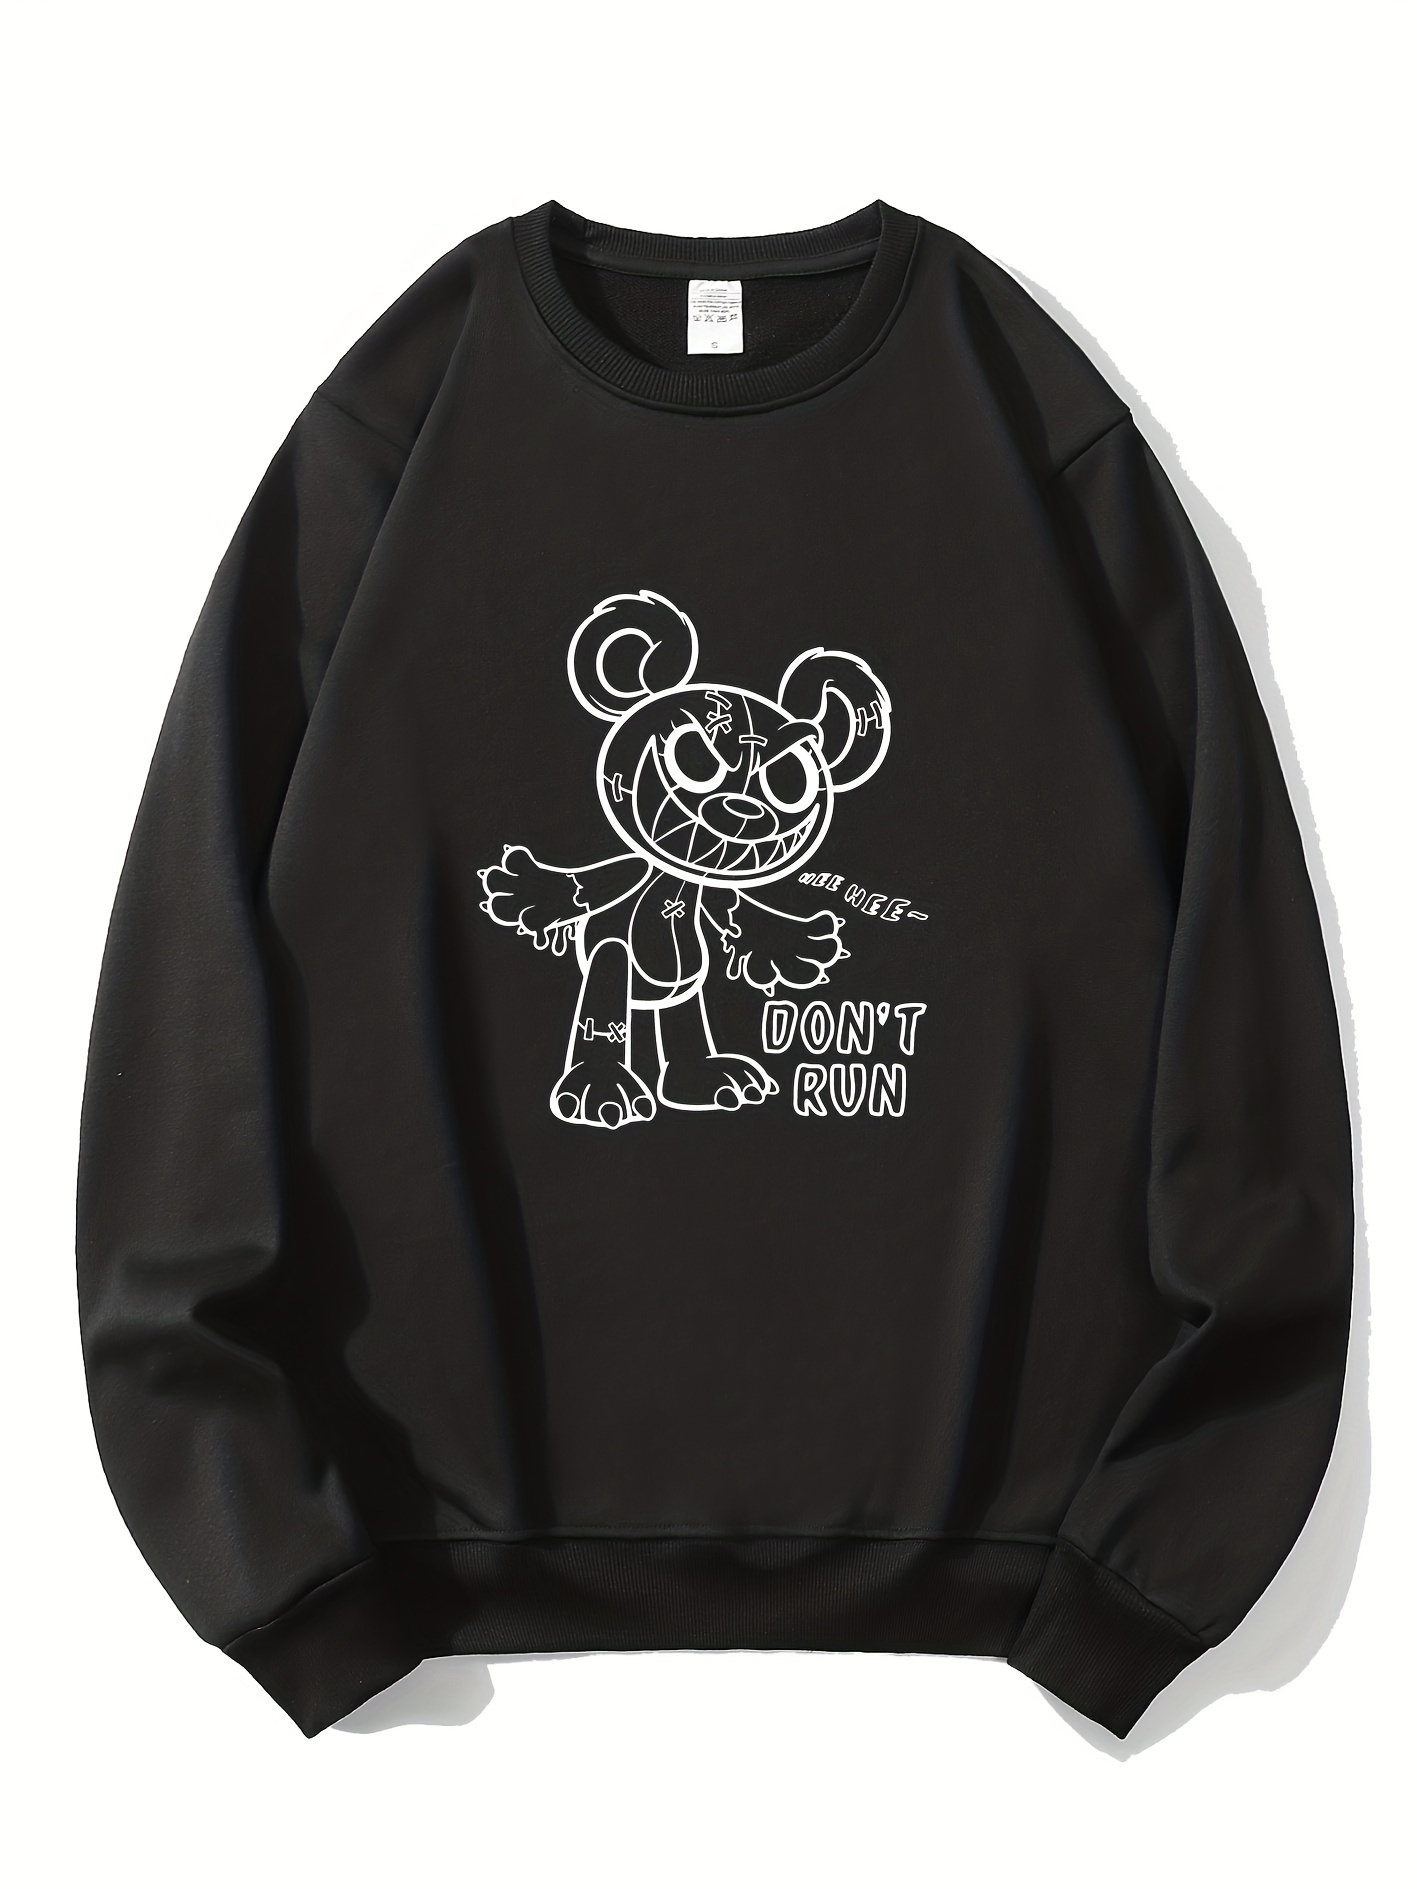 Crazy Bear Print Pullover Sweatshirt, Versatile Long Sleeve Crew